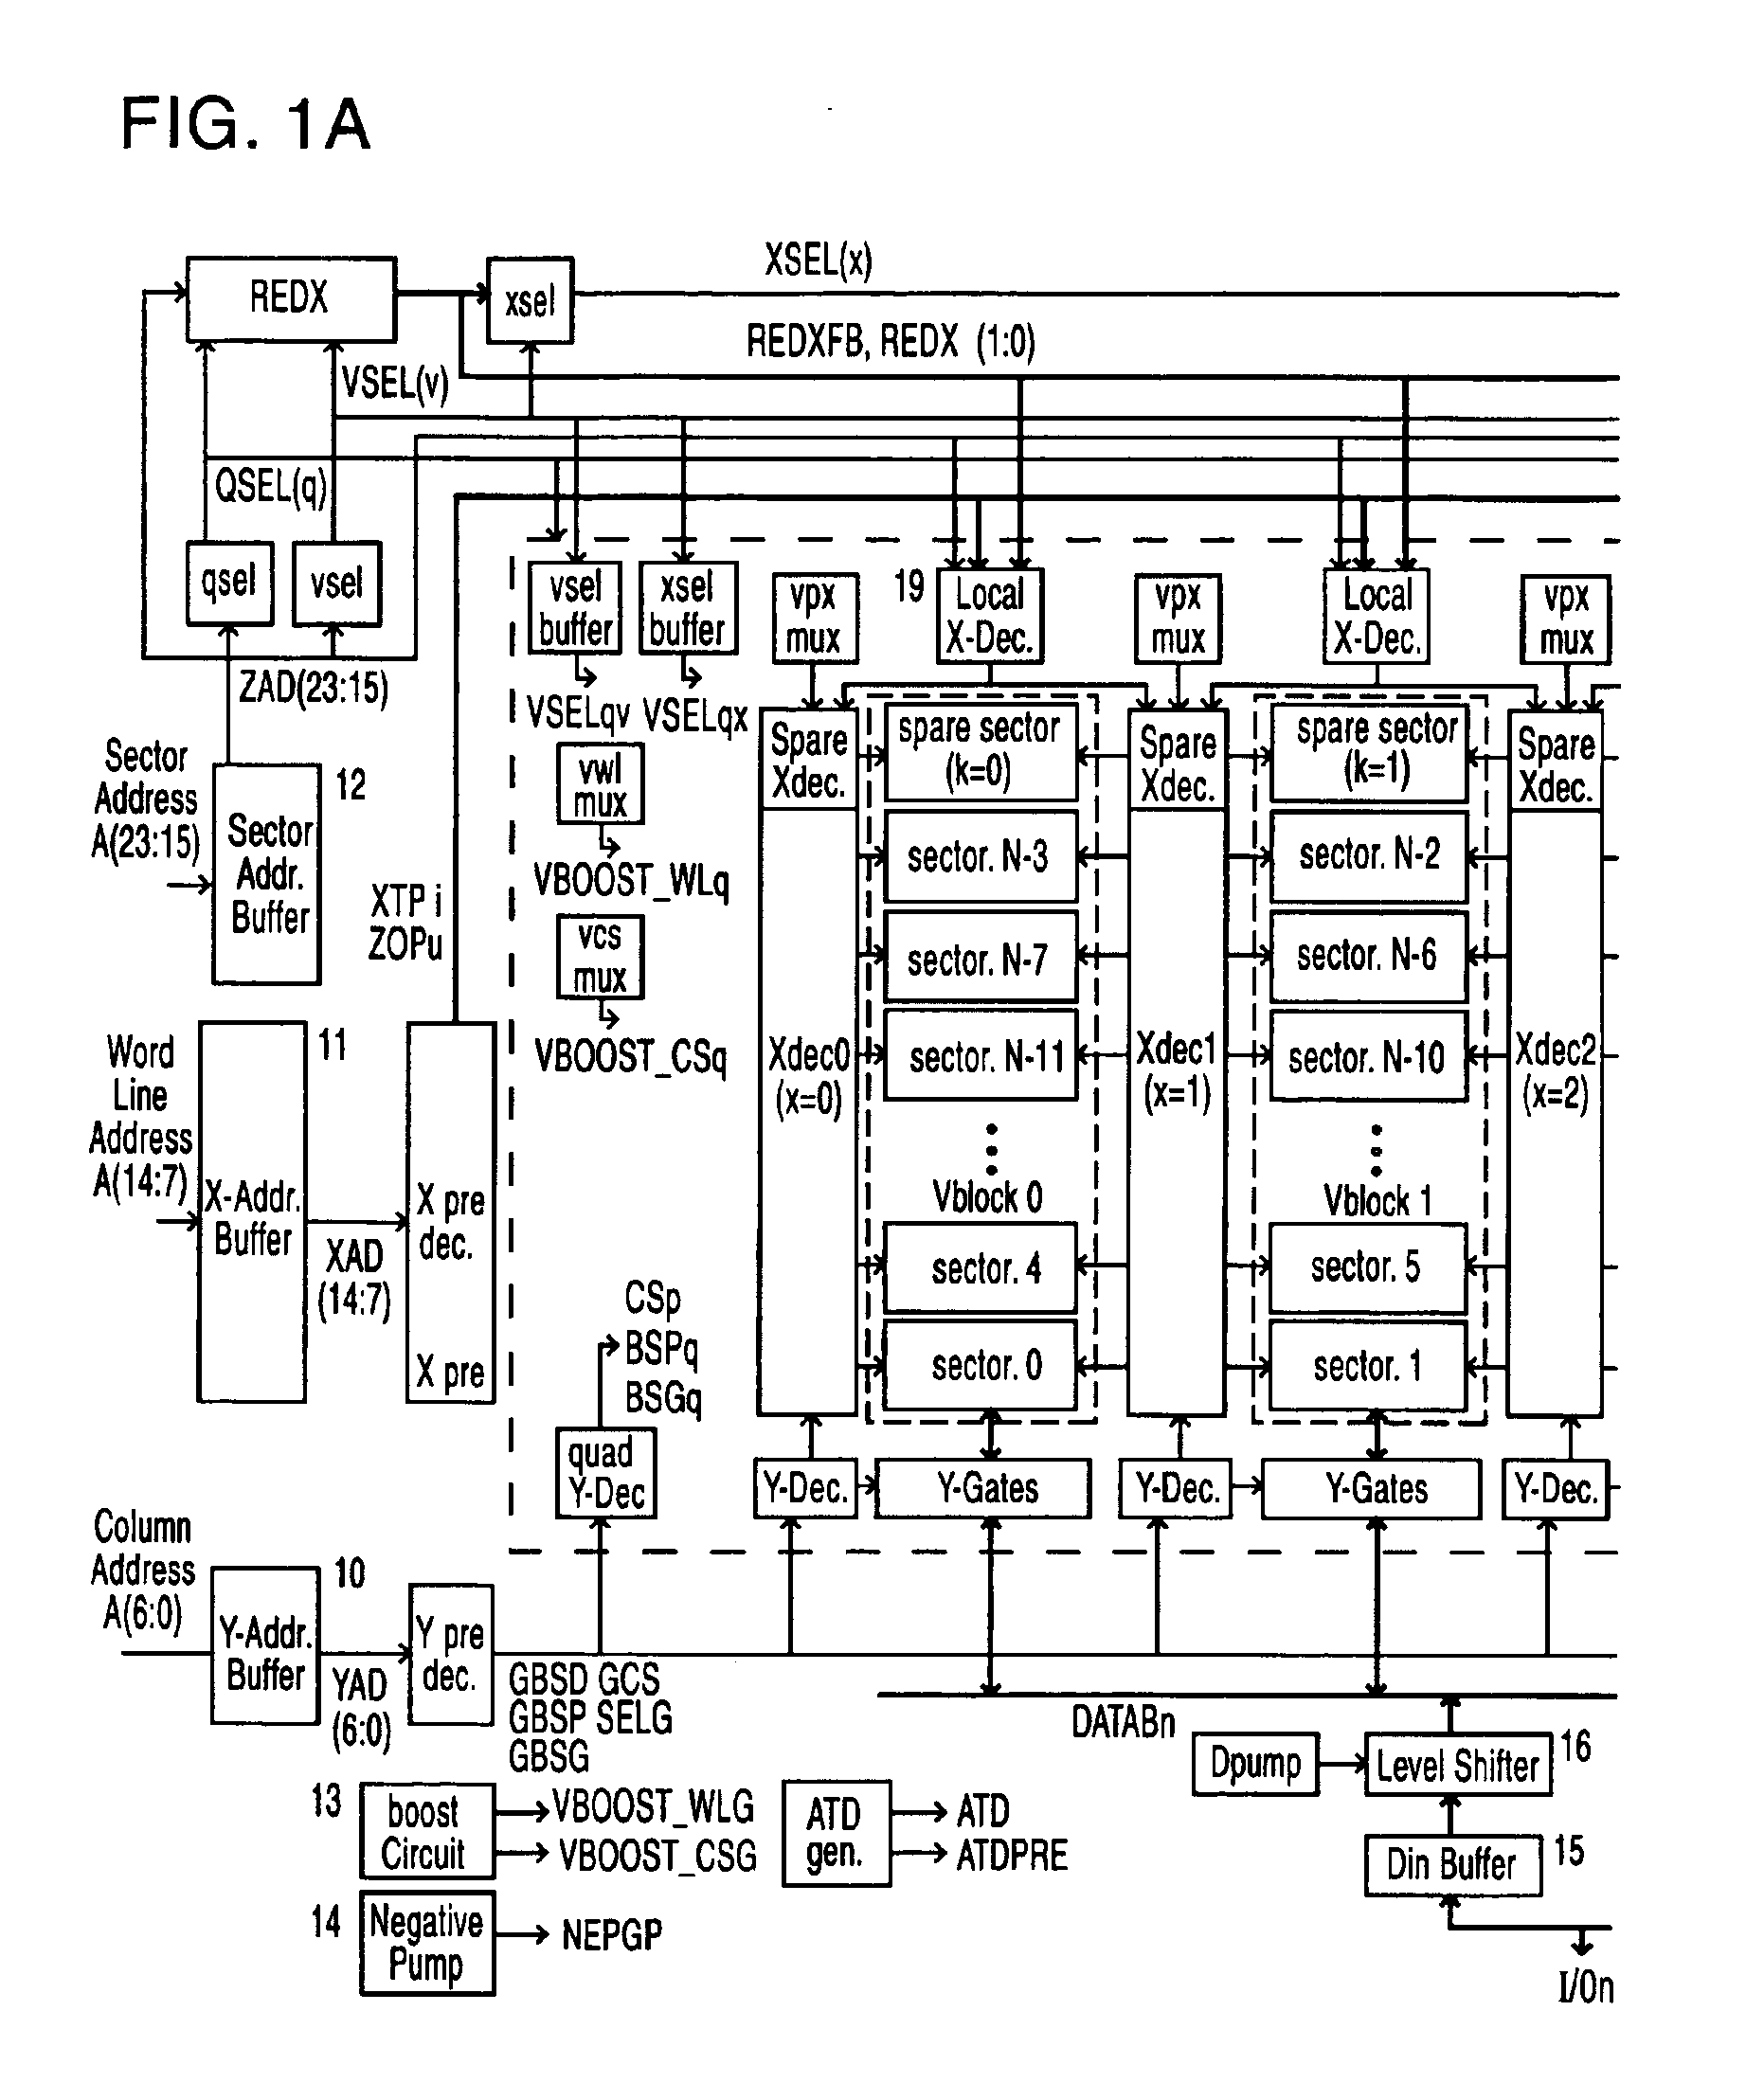 Memory circuit with redundant configuration